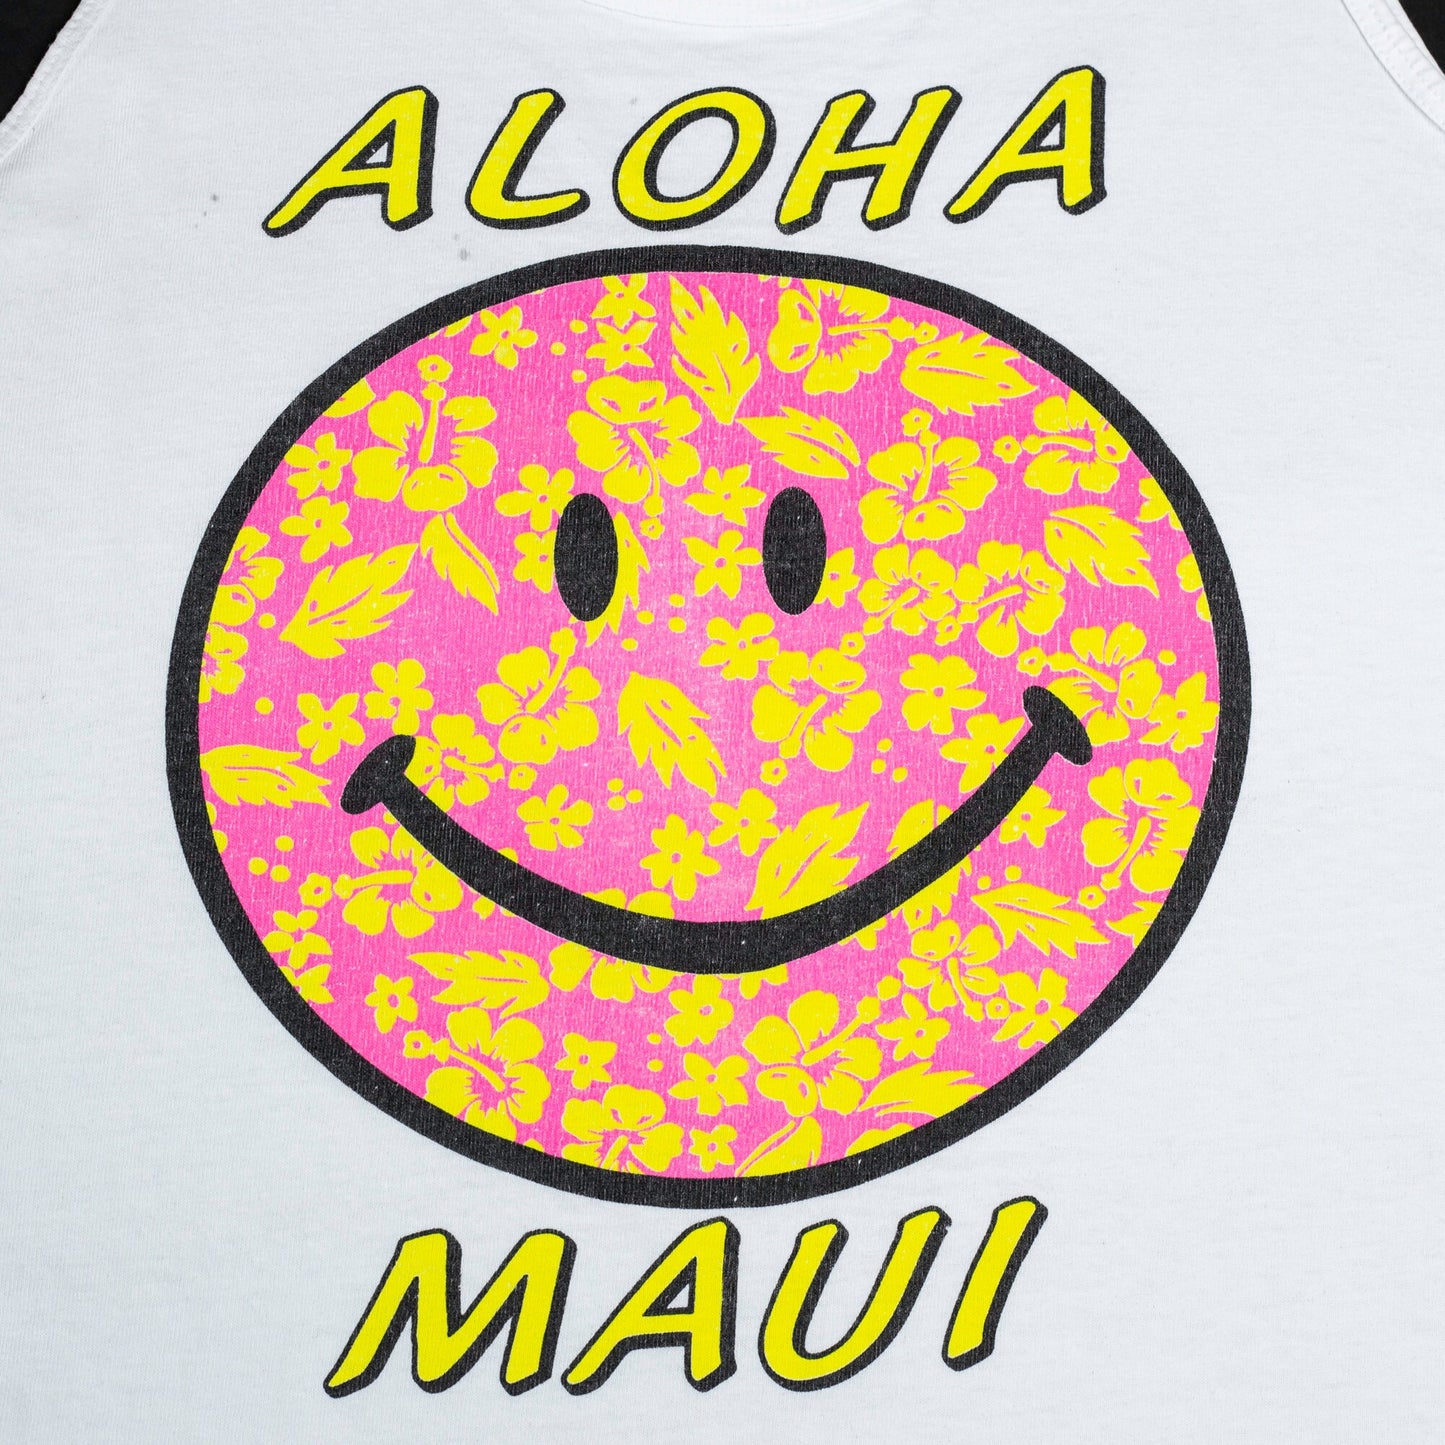 80s Aloha Maui Hawaii Tank Top - Men's Medium, Women's Large | Vintage Smiley Face Graphic Tourist Muscle Tee